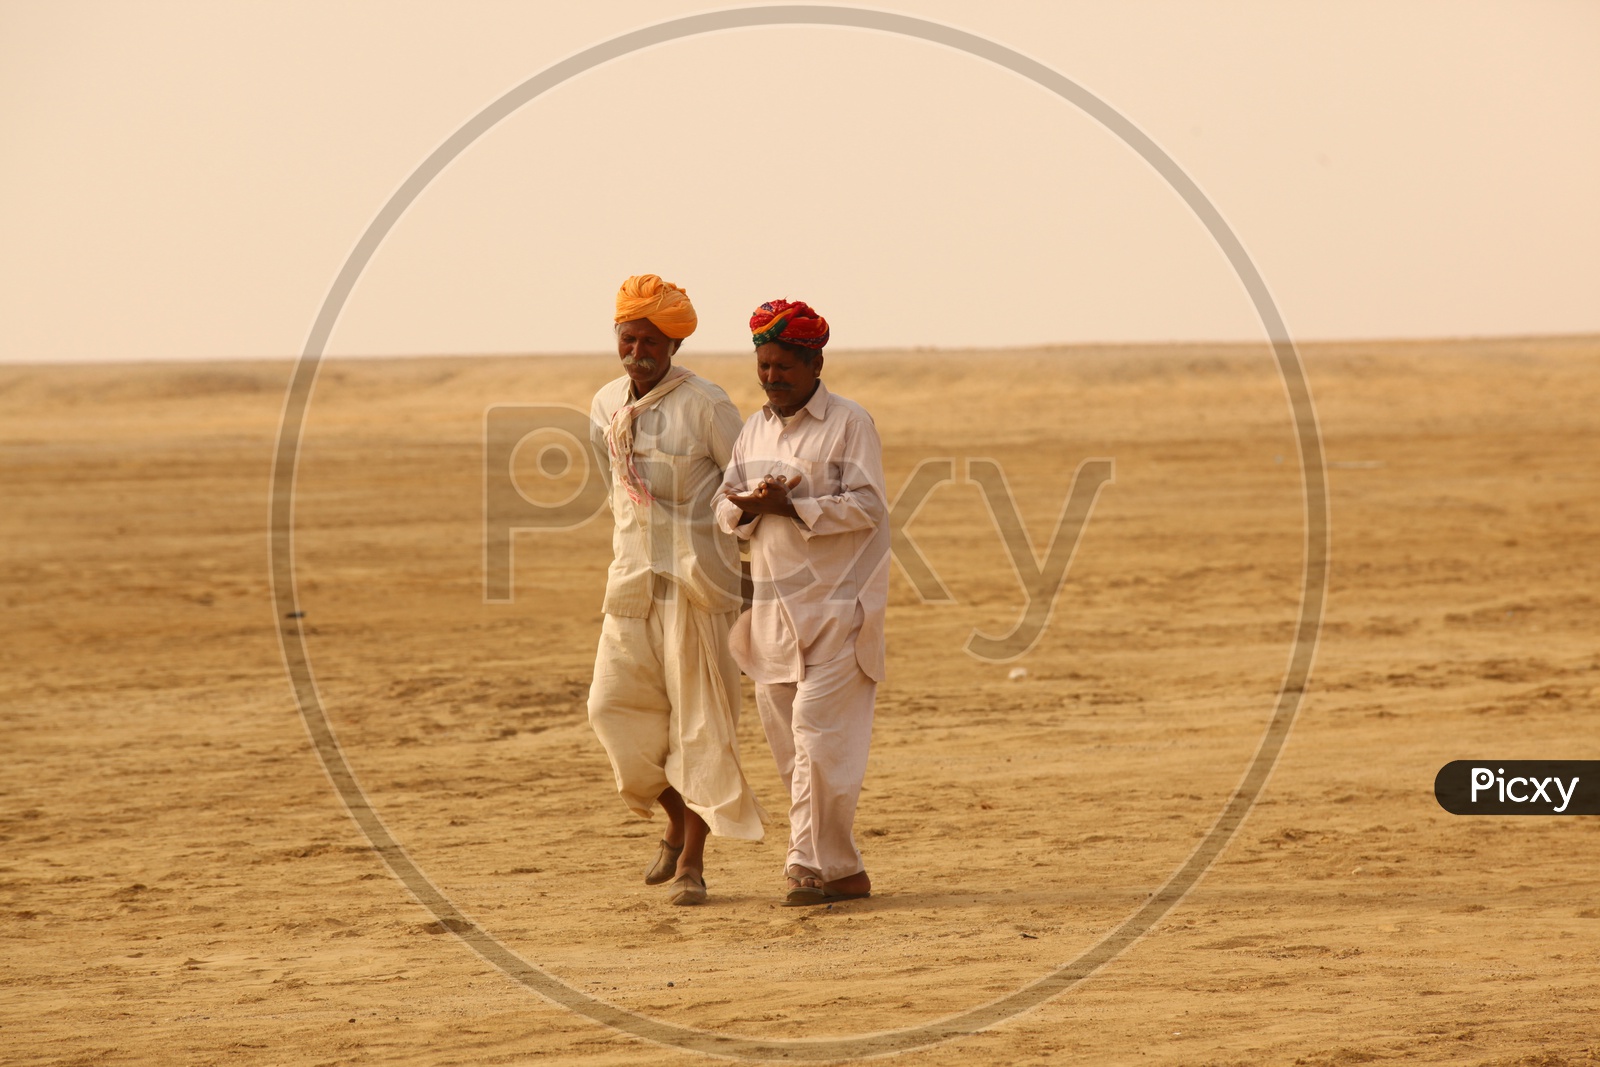 People walking in desert